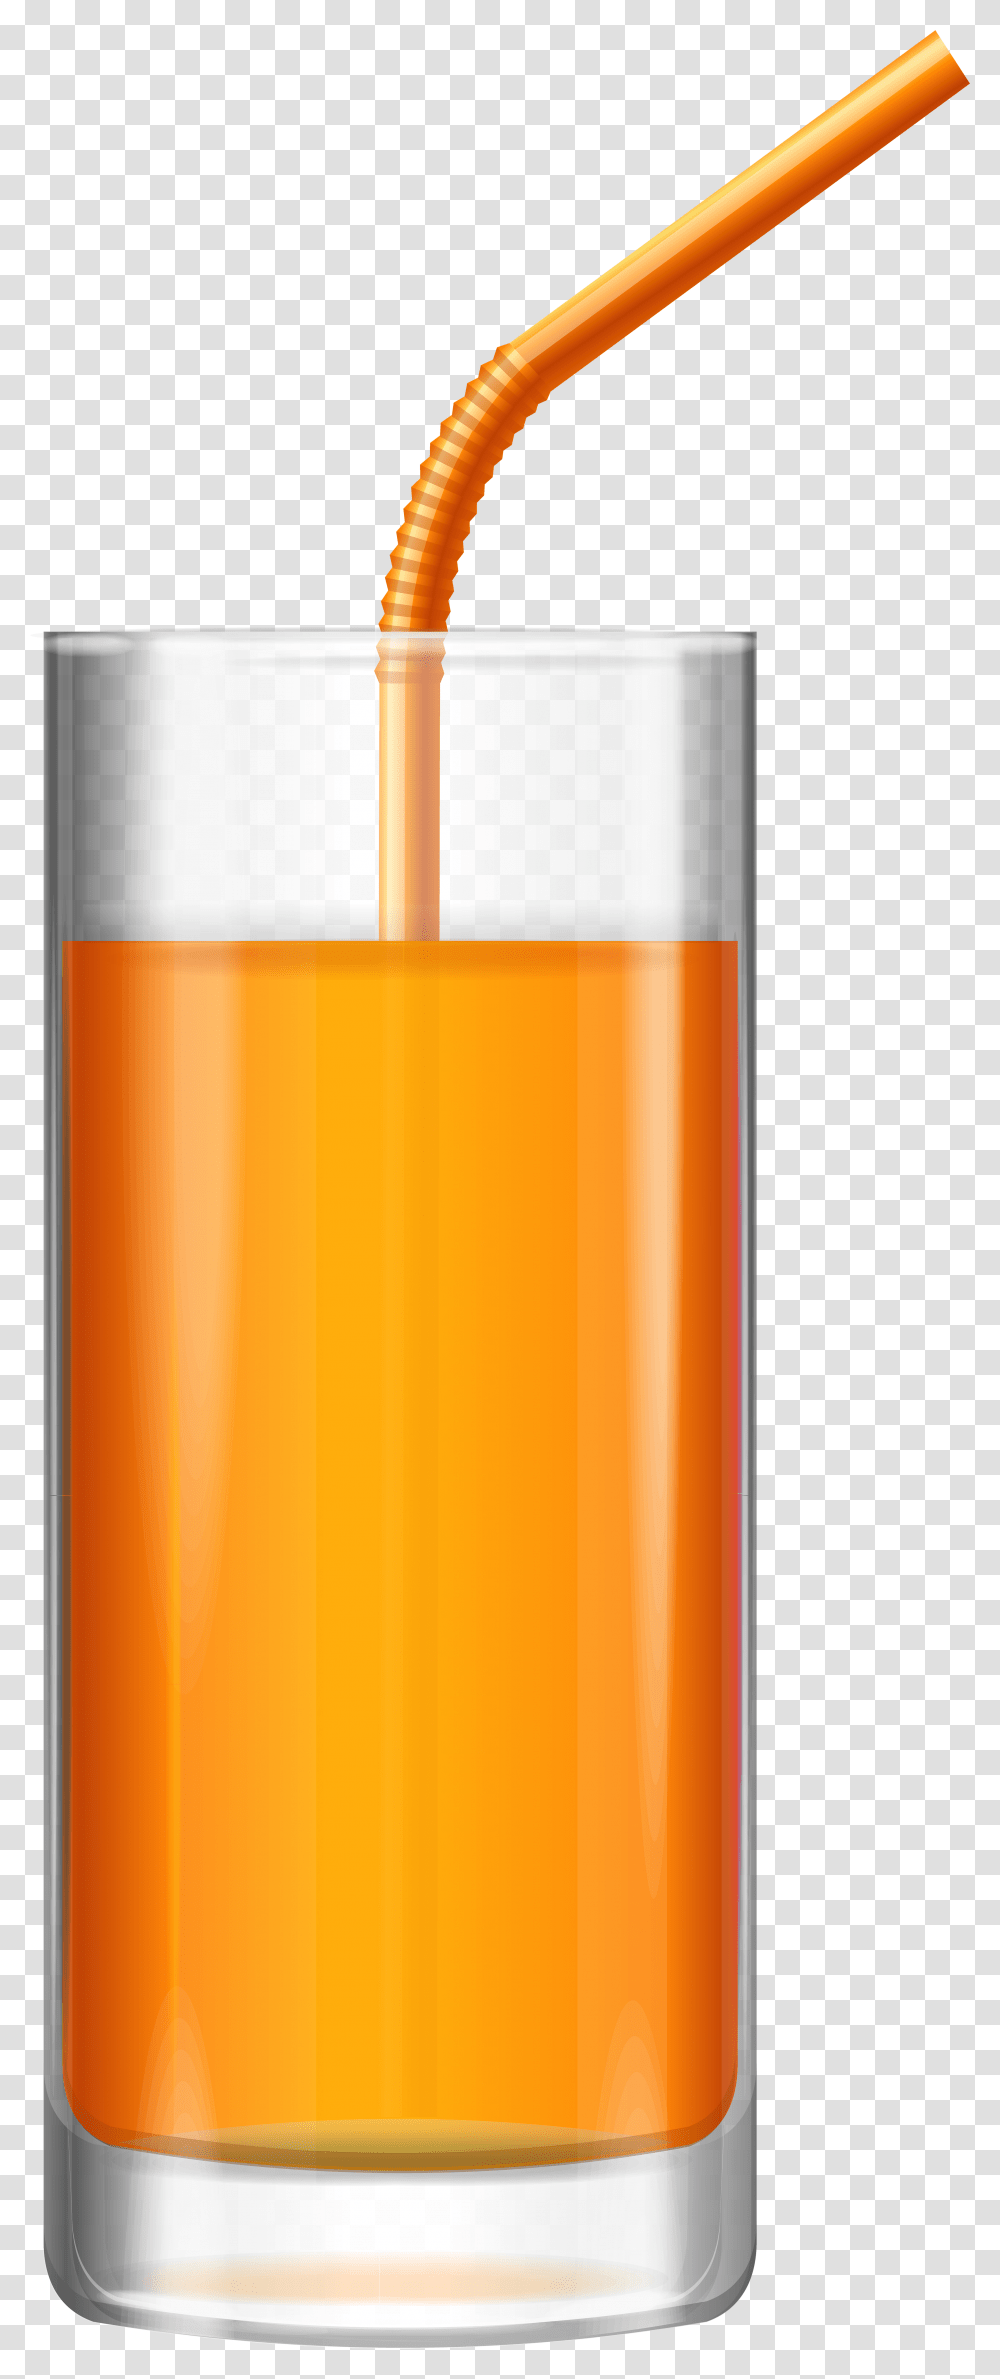 Orange Juice Clip Art Image Gallery Yopriceville High Juice Clipart Beverage Drink Glass Alcohol Transparent Png Pngset Com